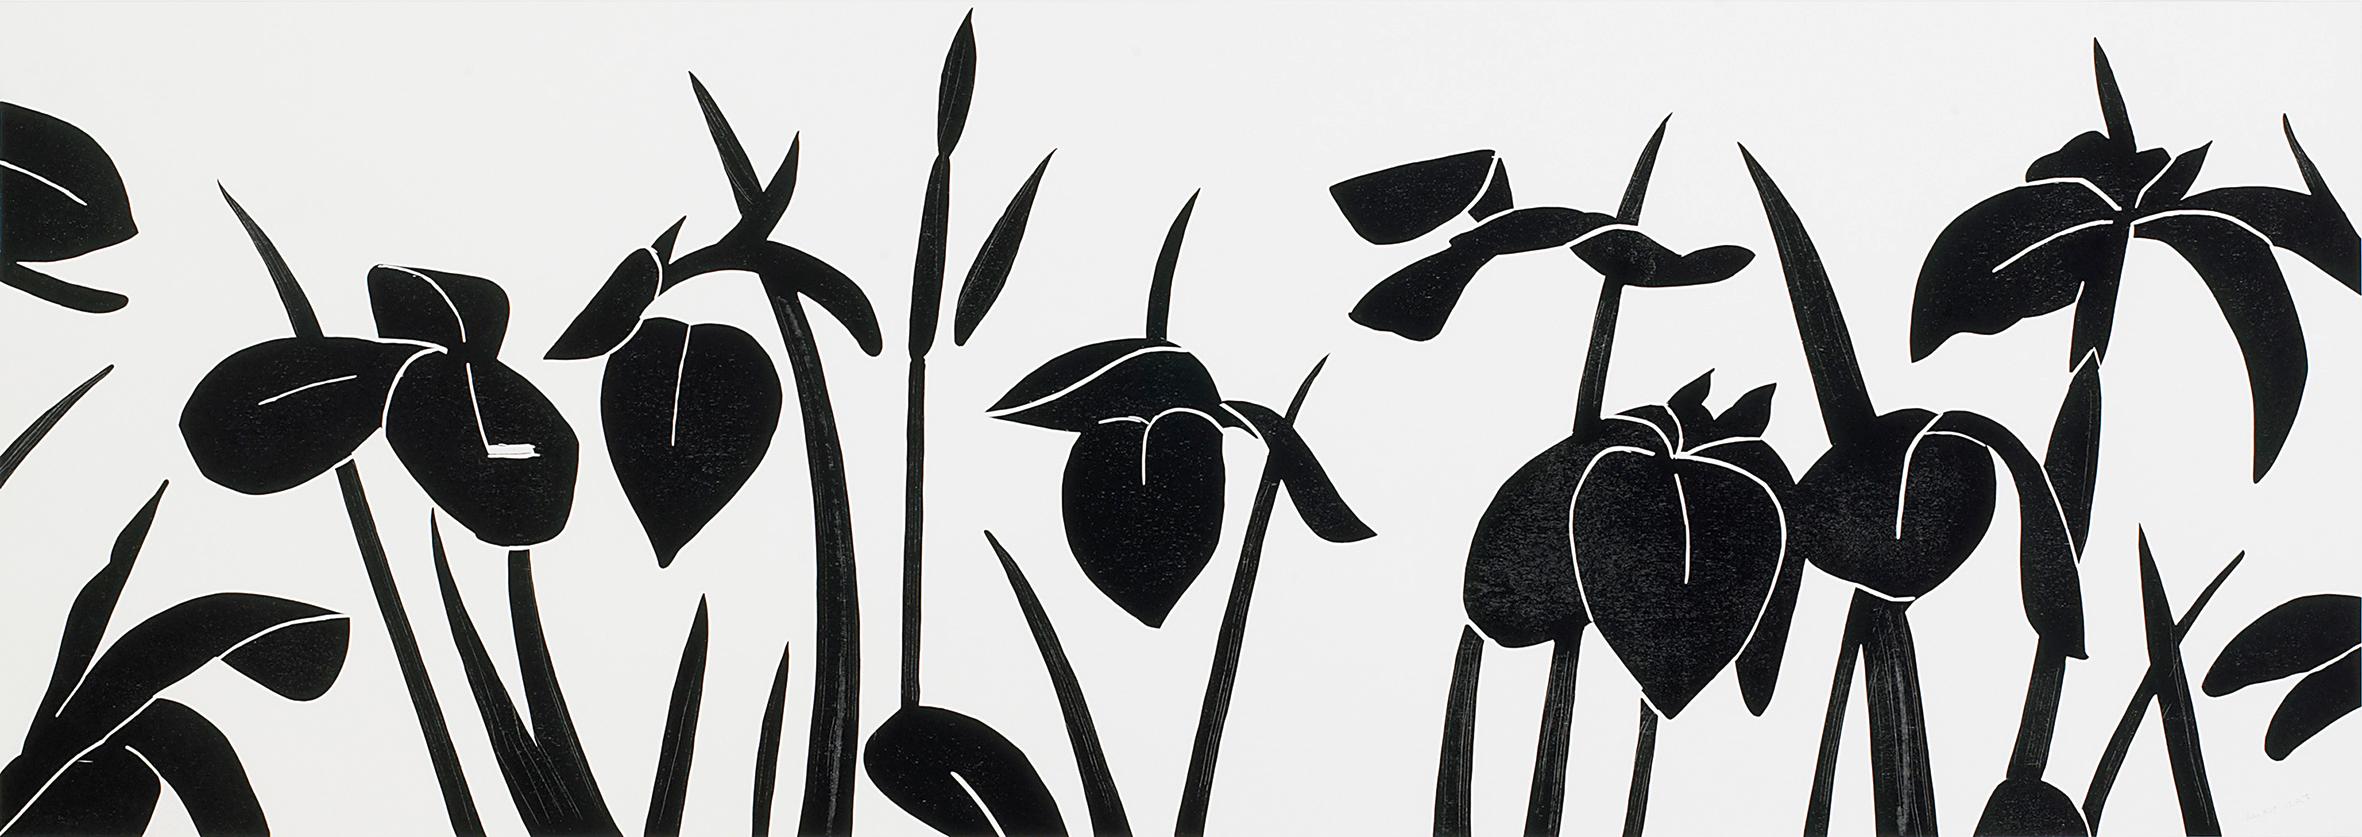 Alex Katz Landscape Print - Flags - woodcut, flowers, flags, Katz, black and white